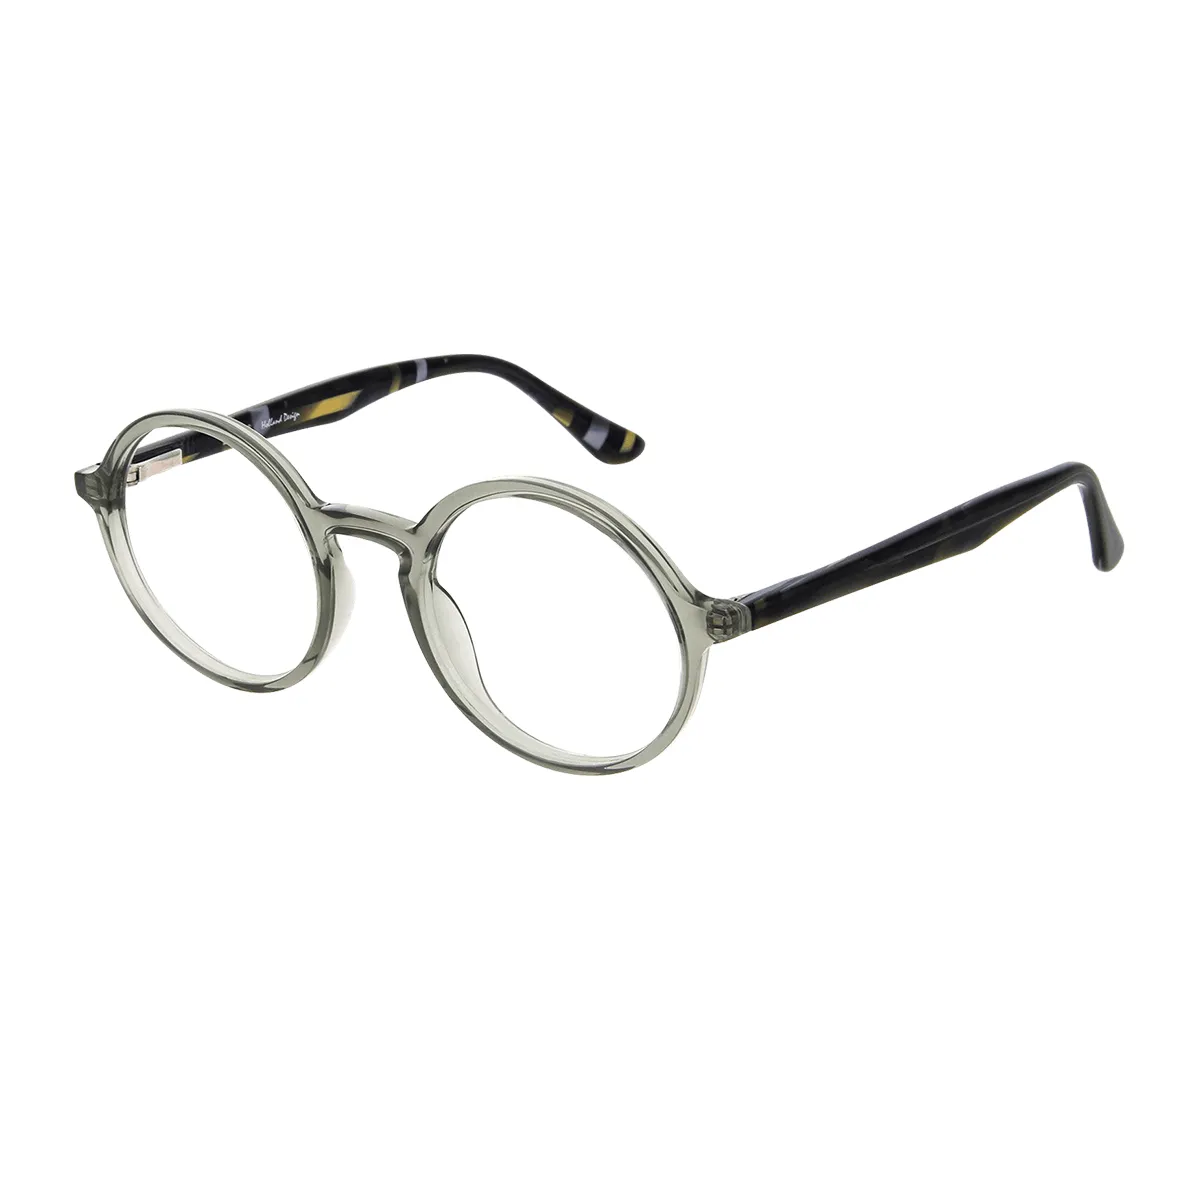 Fashion Round Gray Glasses for Women